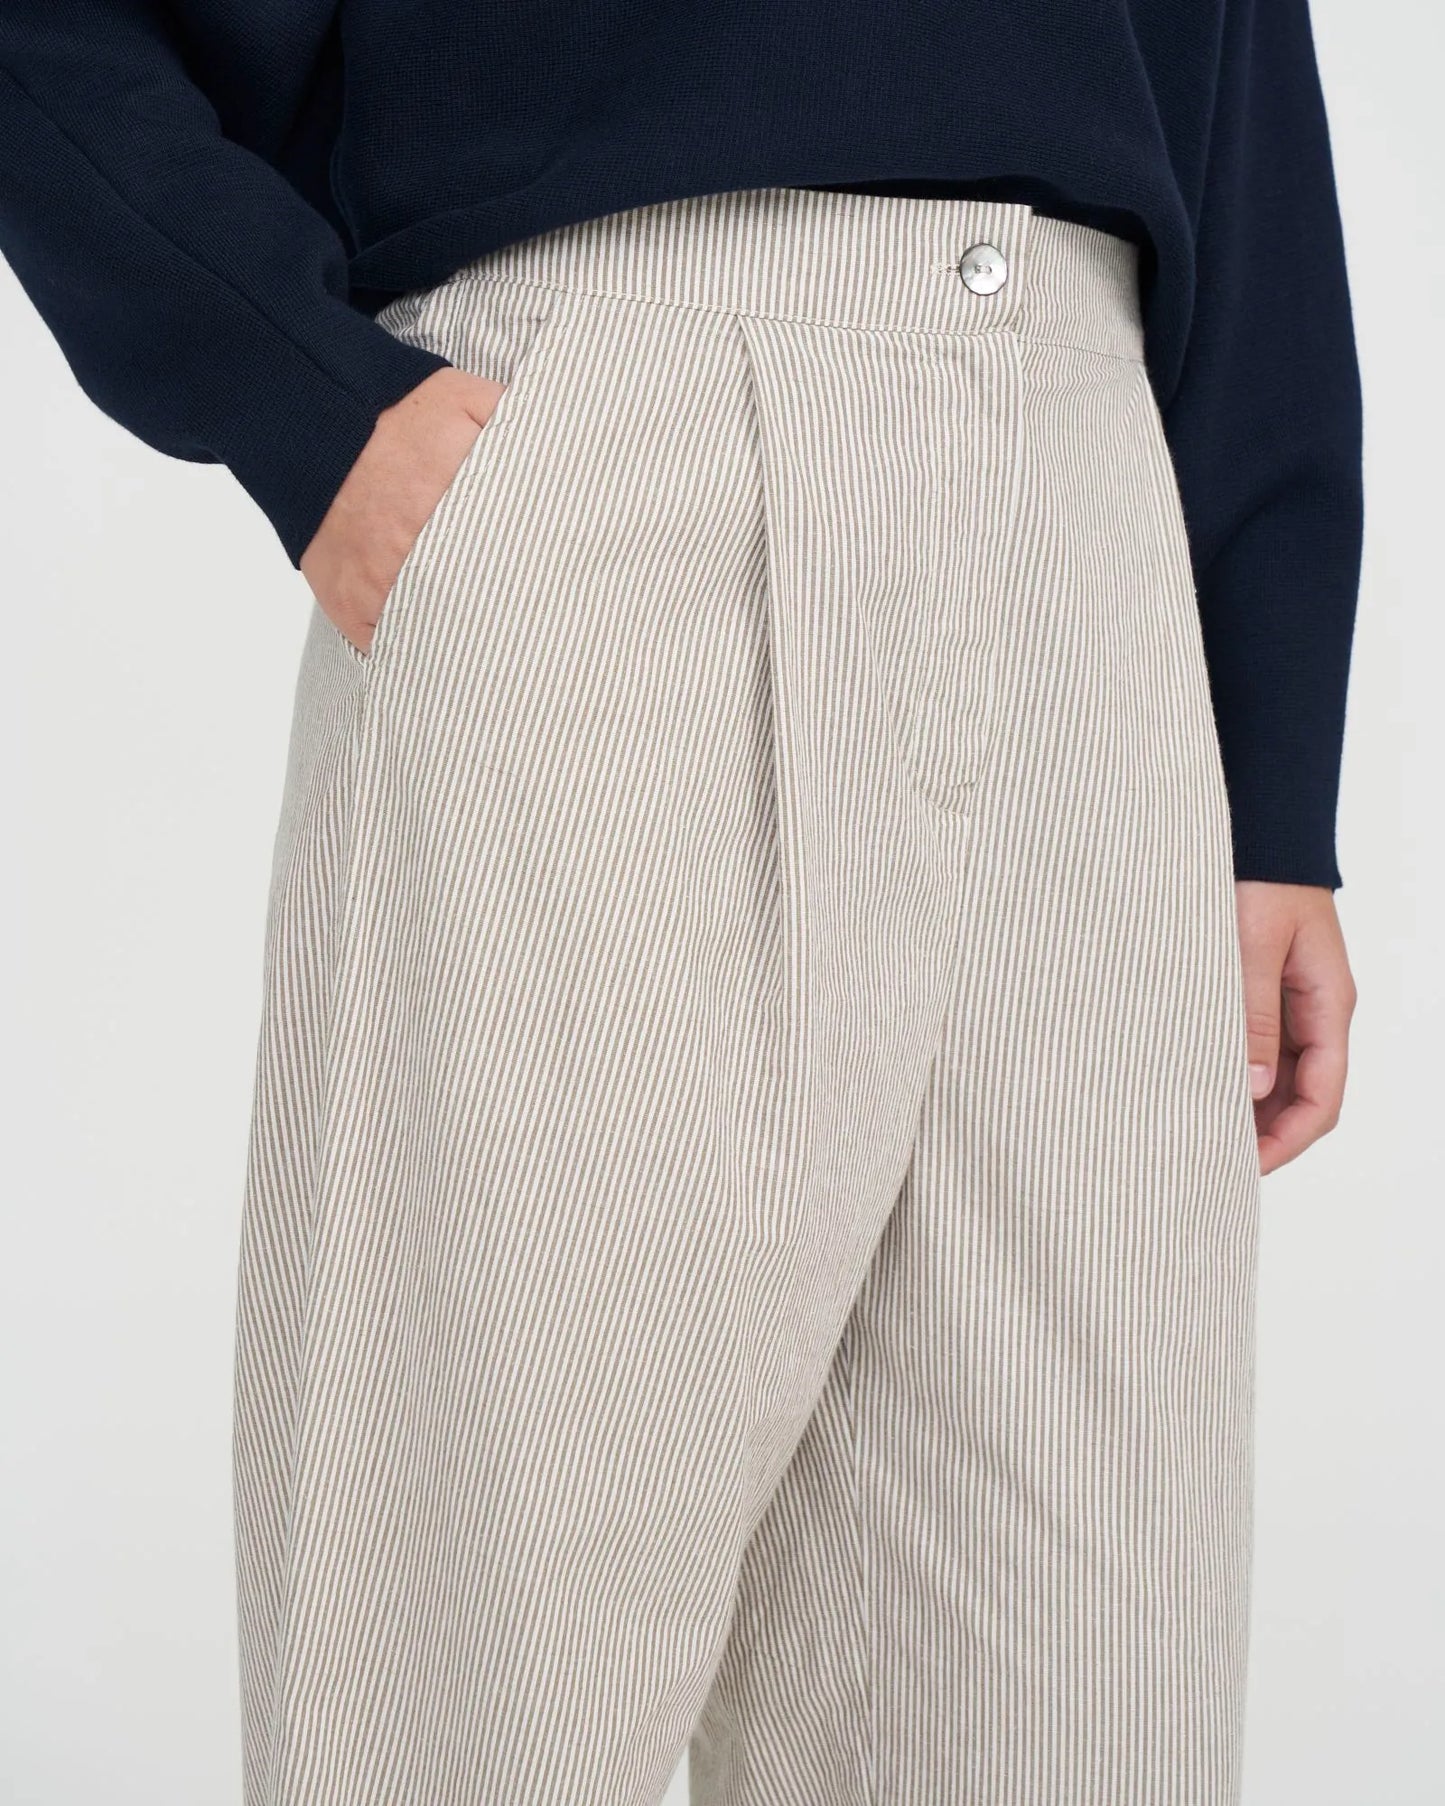 Marina Pants - Khaki/White (Stripe)